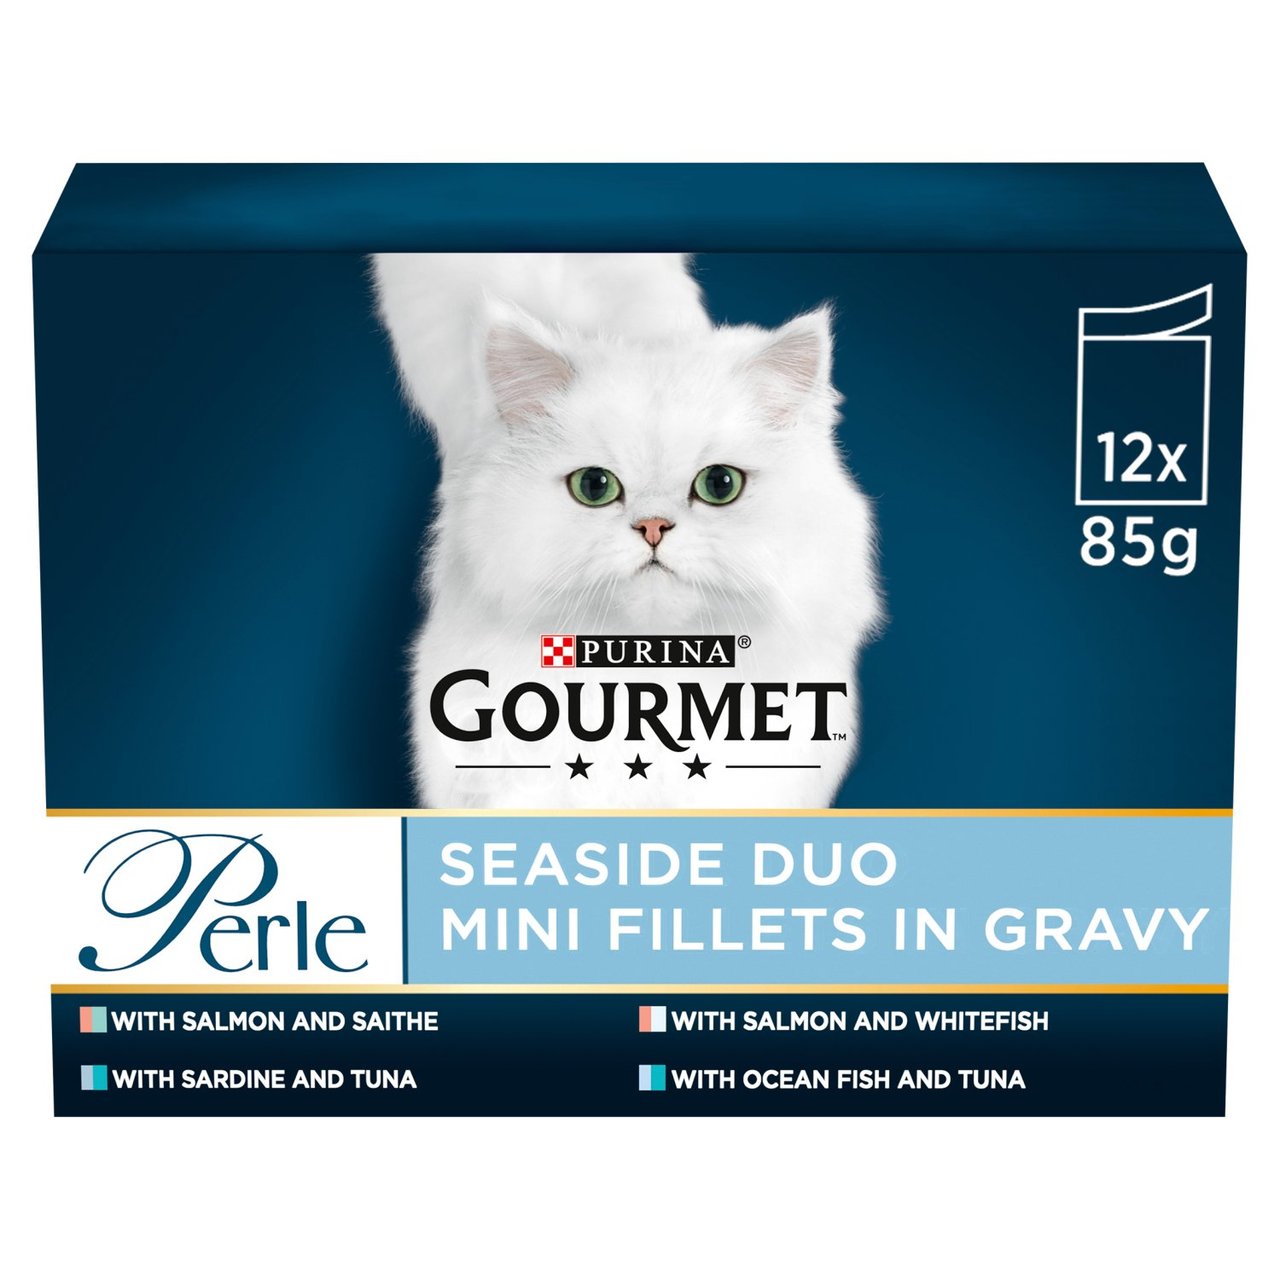 An image of Gourmet Perle Seaside Duos